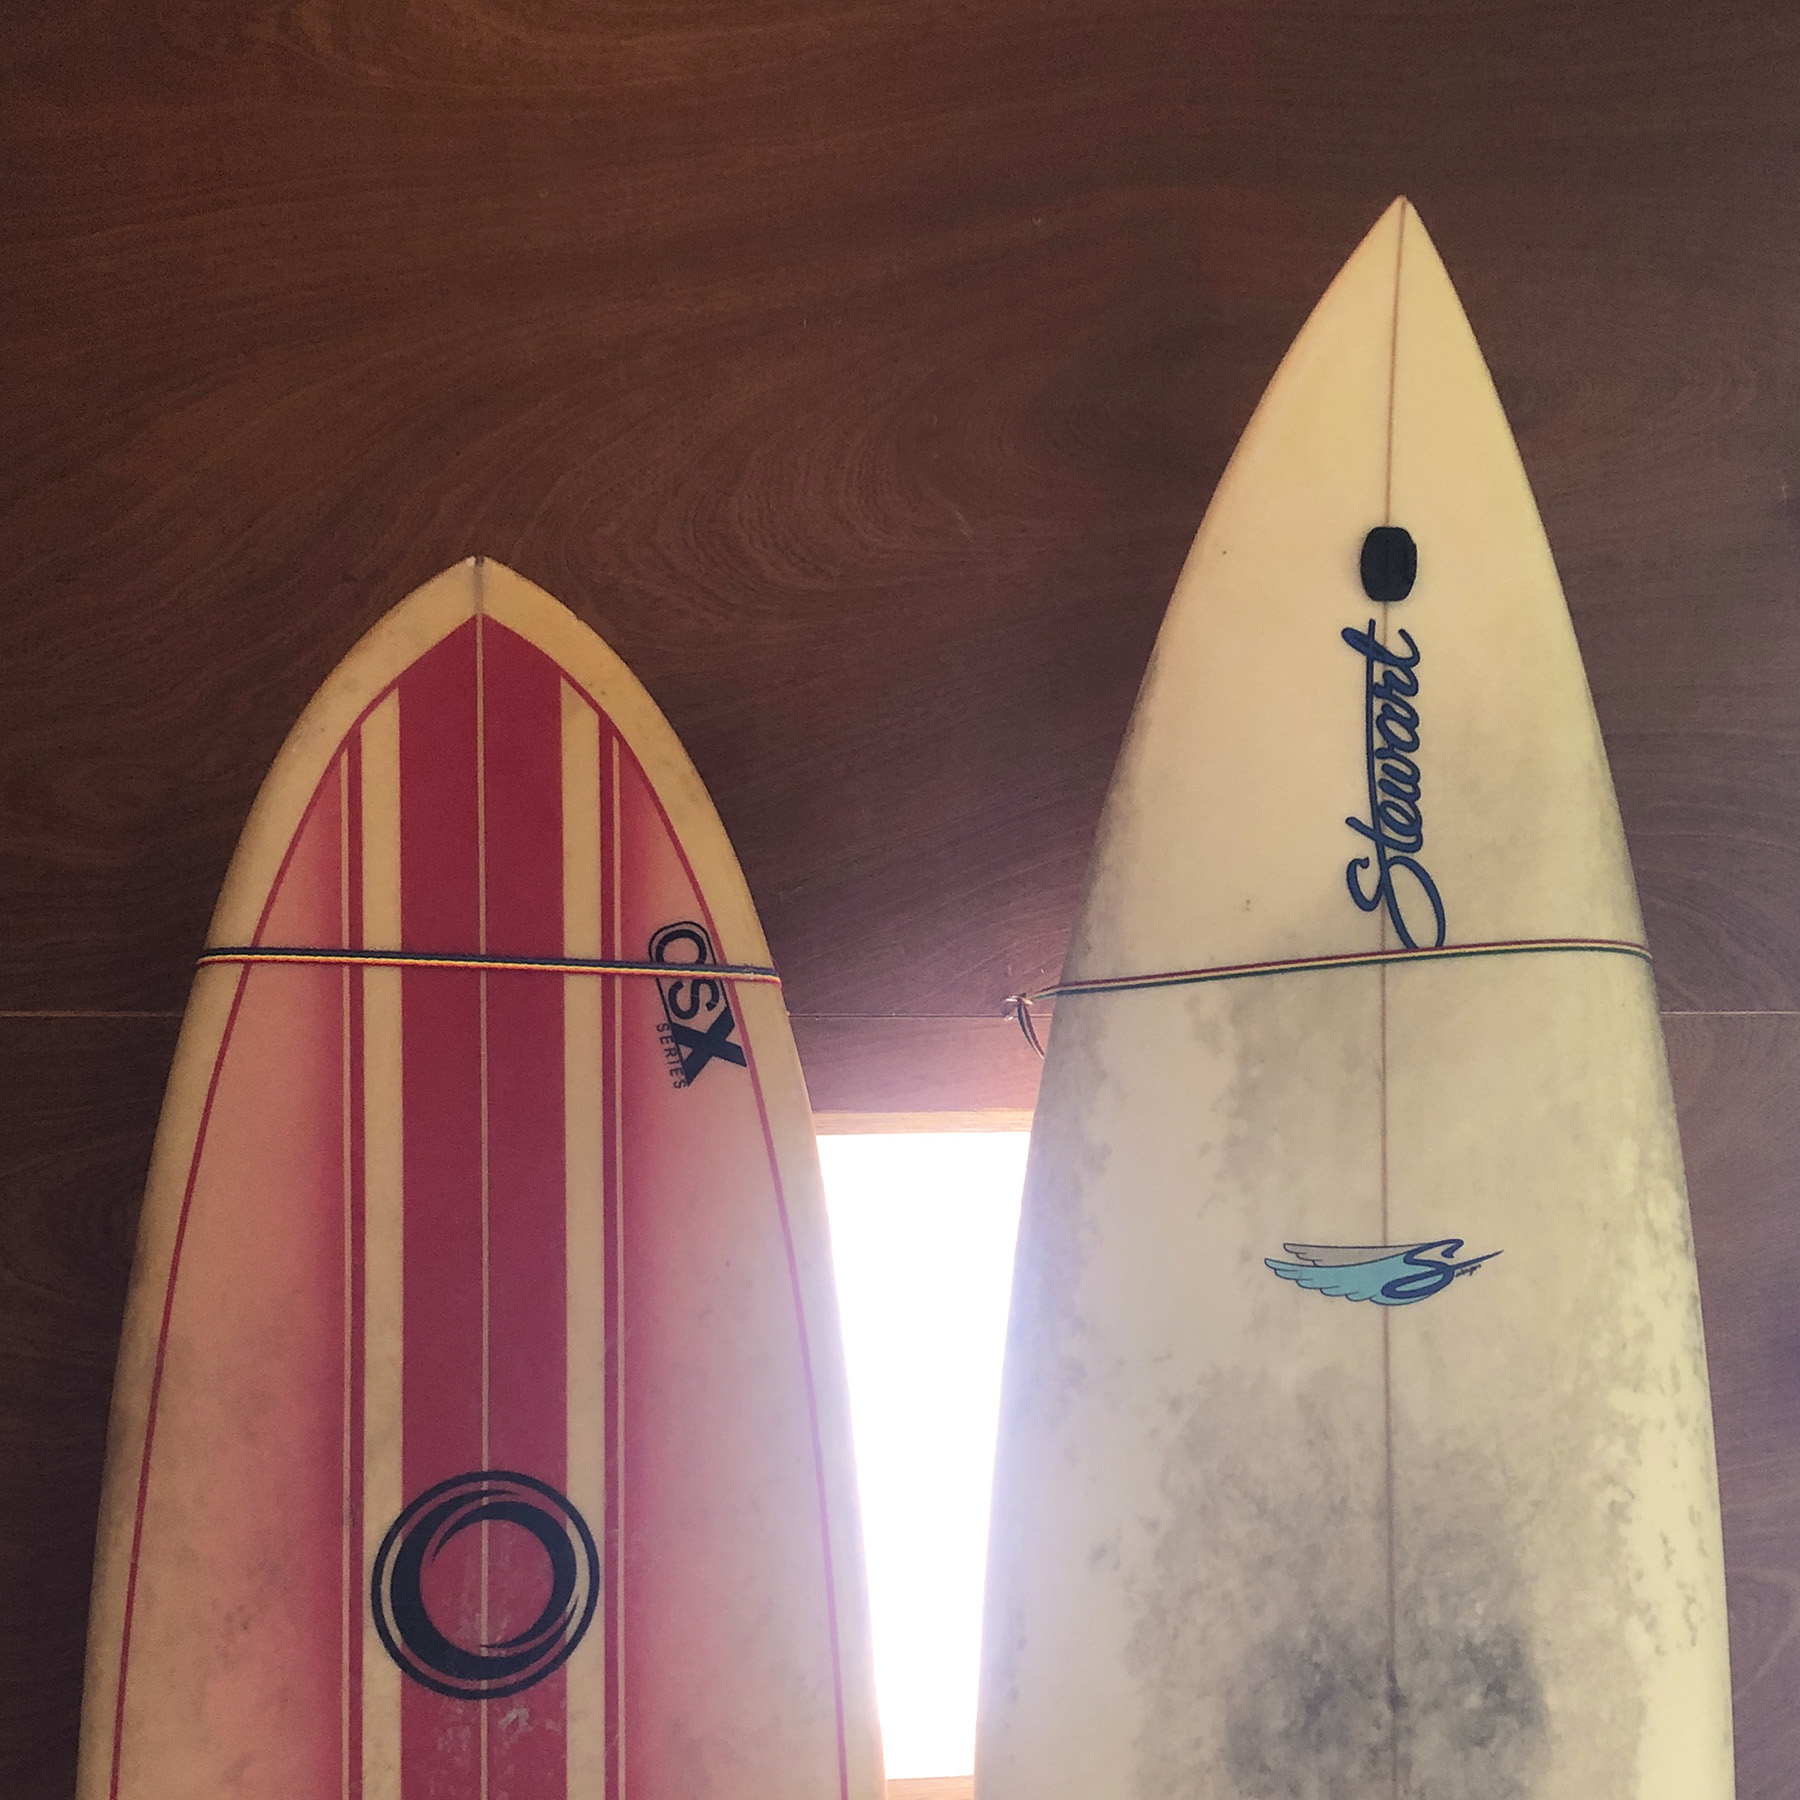 Surfboards stored overhead in a garden cabin